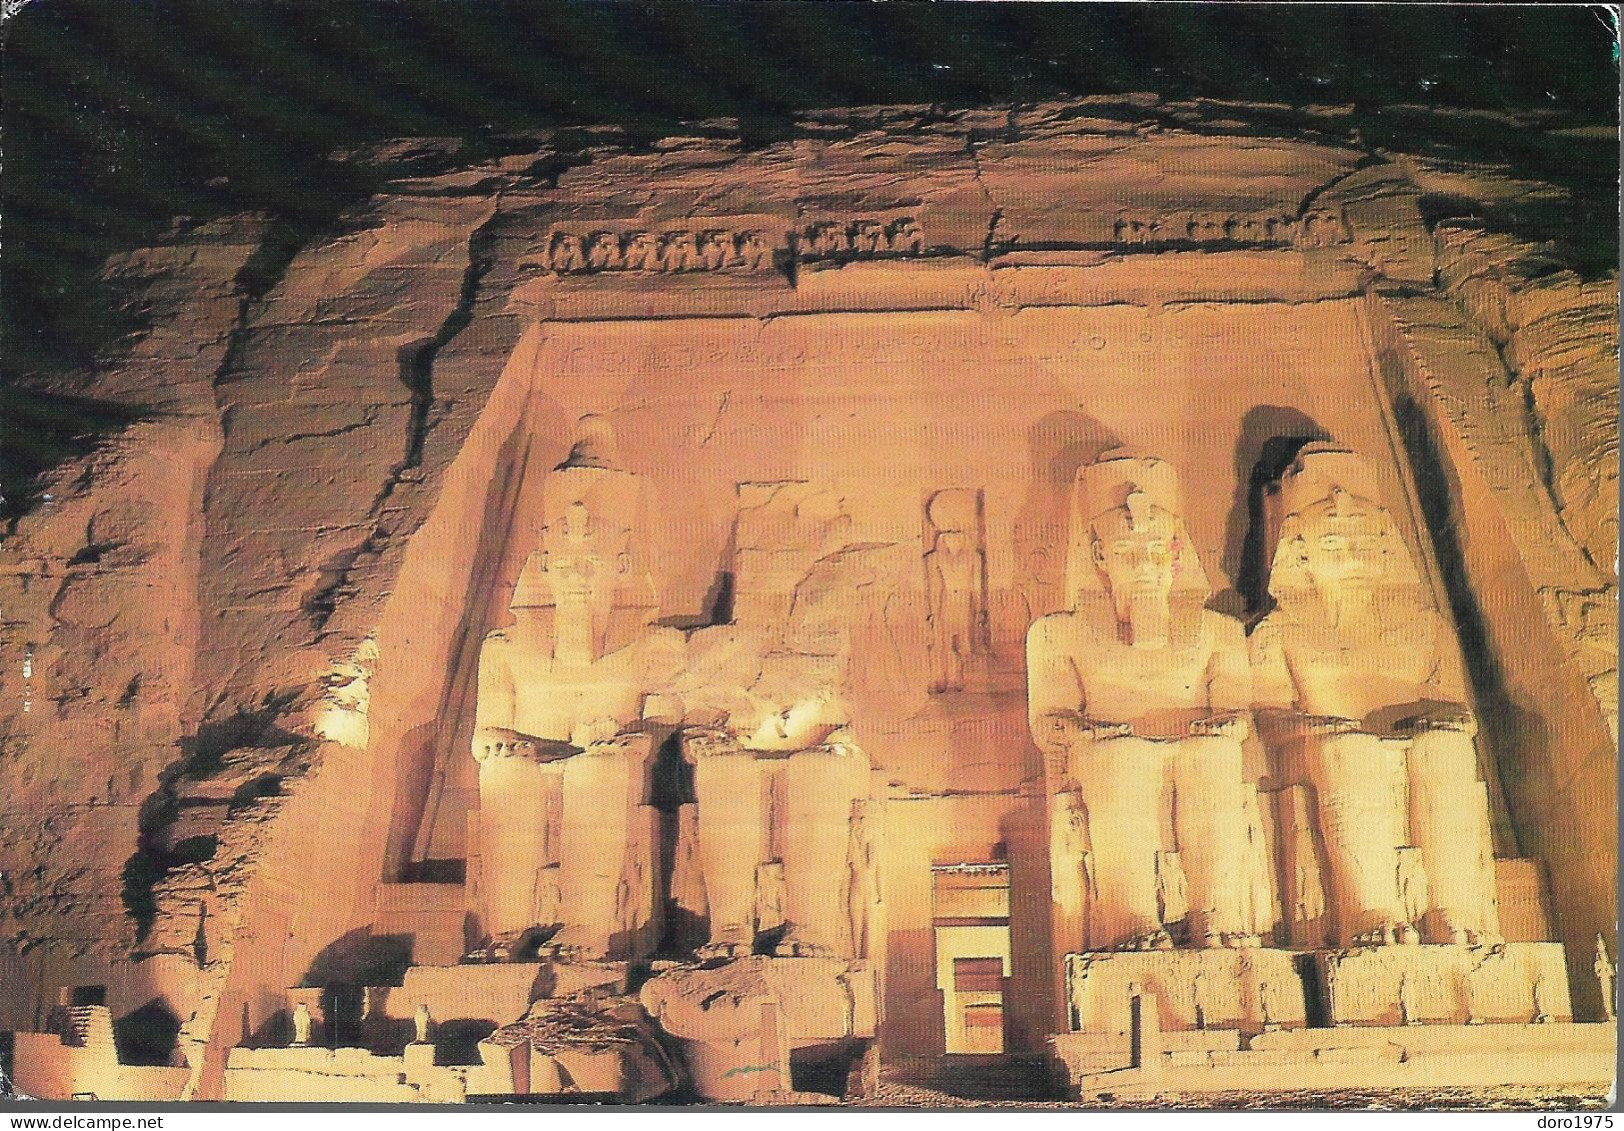 EGYPT - Abu Simbel Temple By Night - Used Postcard - Tempel Von Abu Simbel